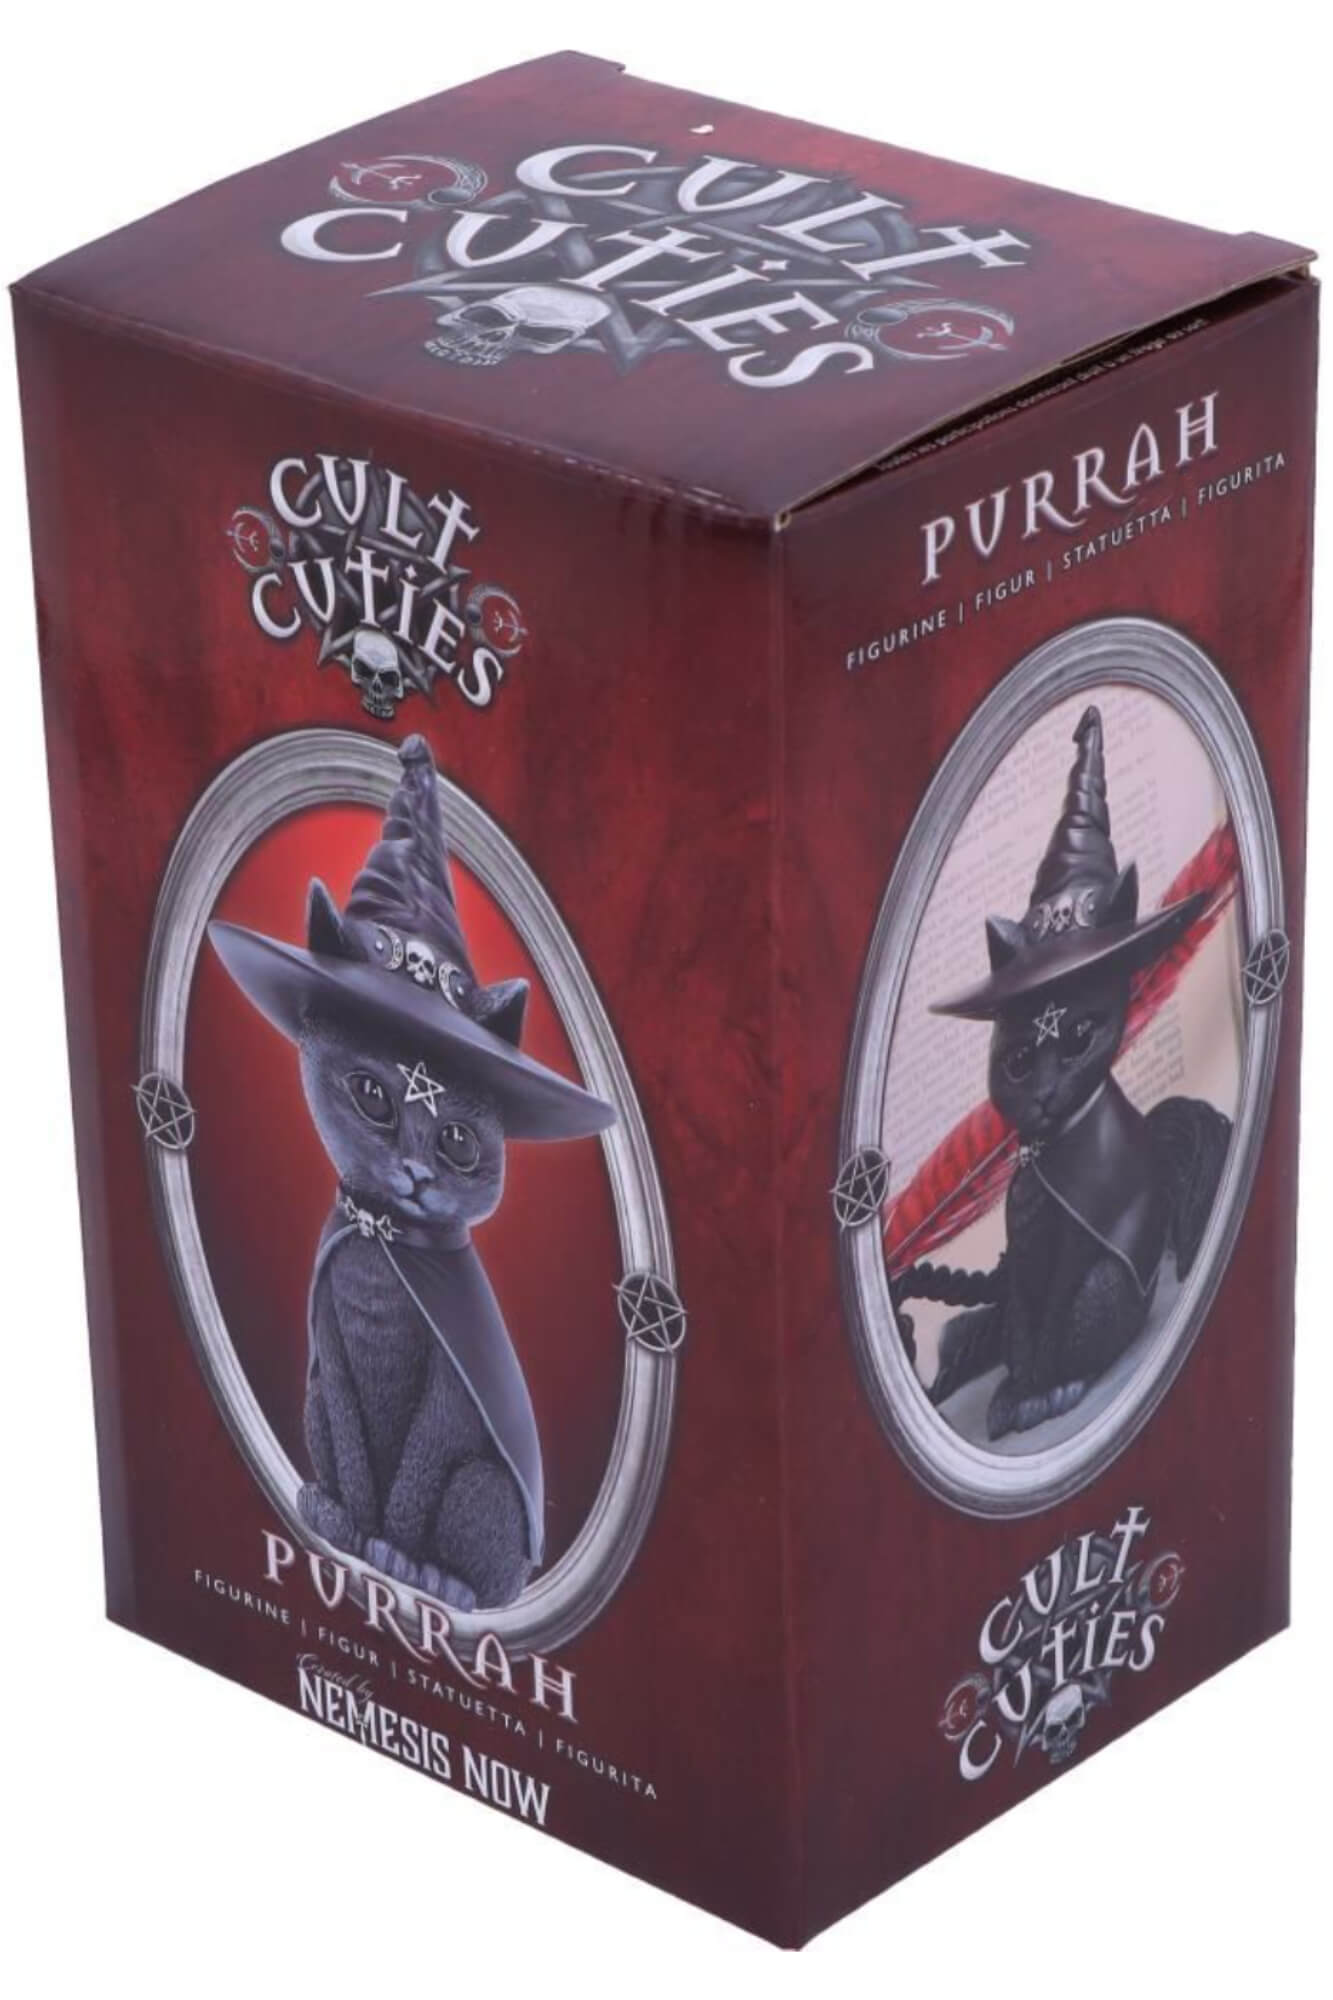 Nemesis Now Purrah Witches Hat Occult Cat Figurine Ornament